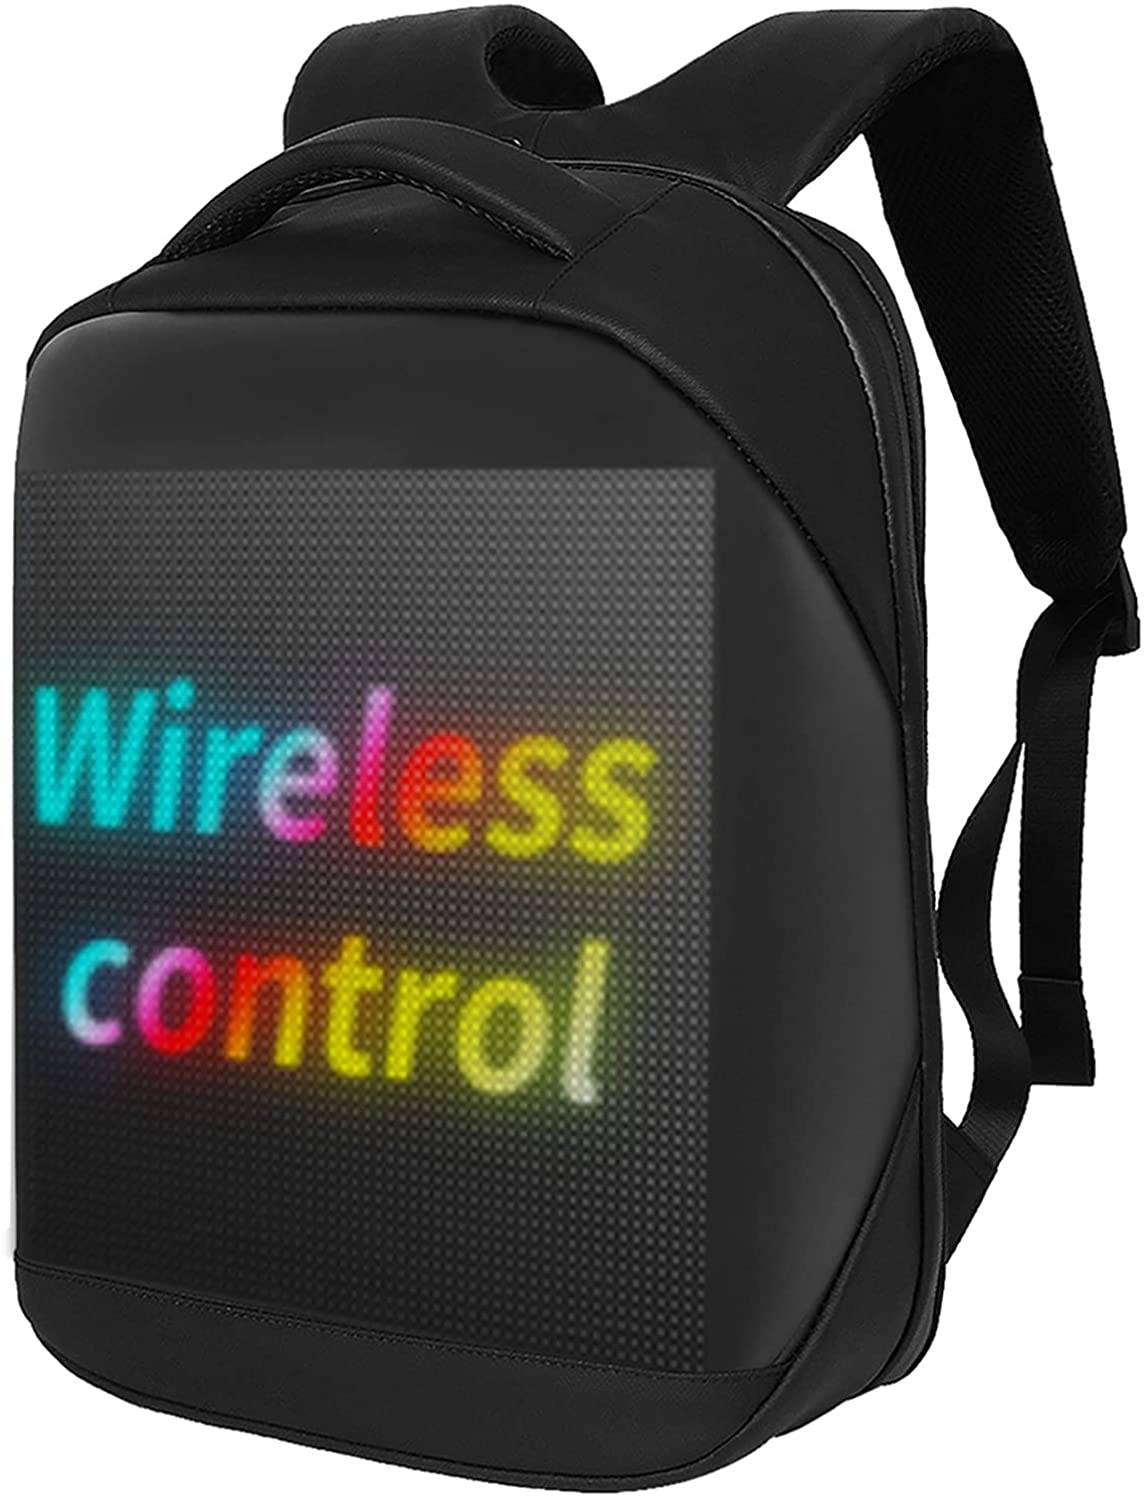 Smart LED Backpack Bags & Wallets Fashion